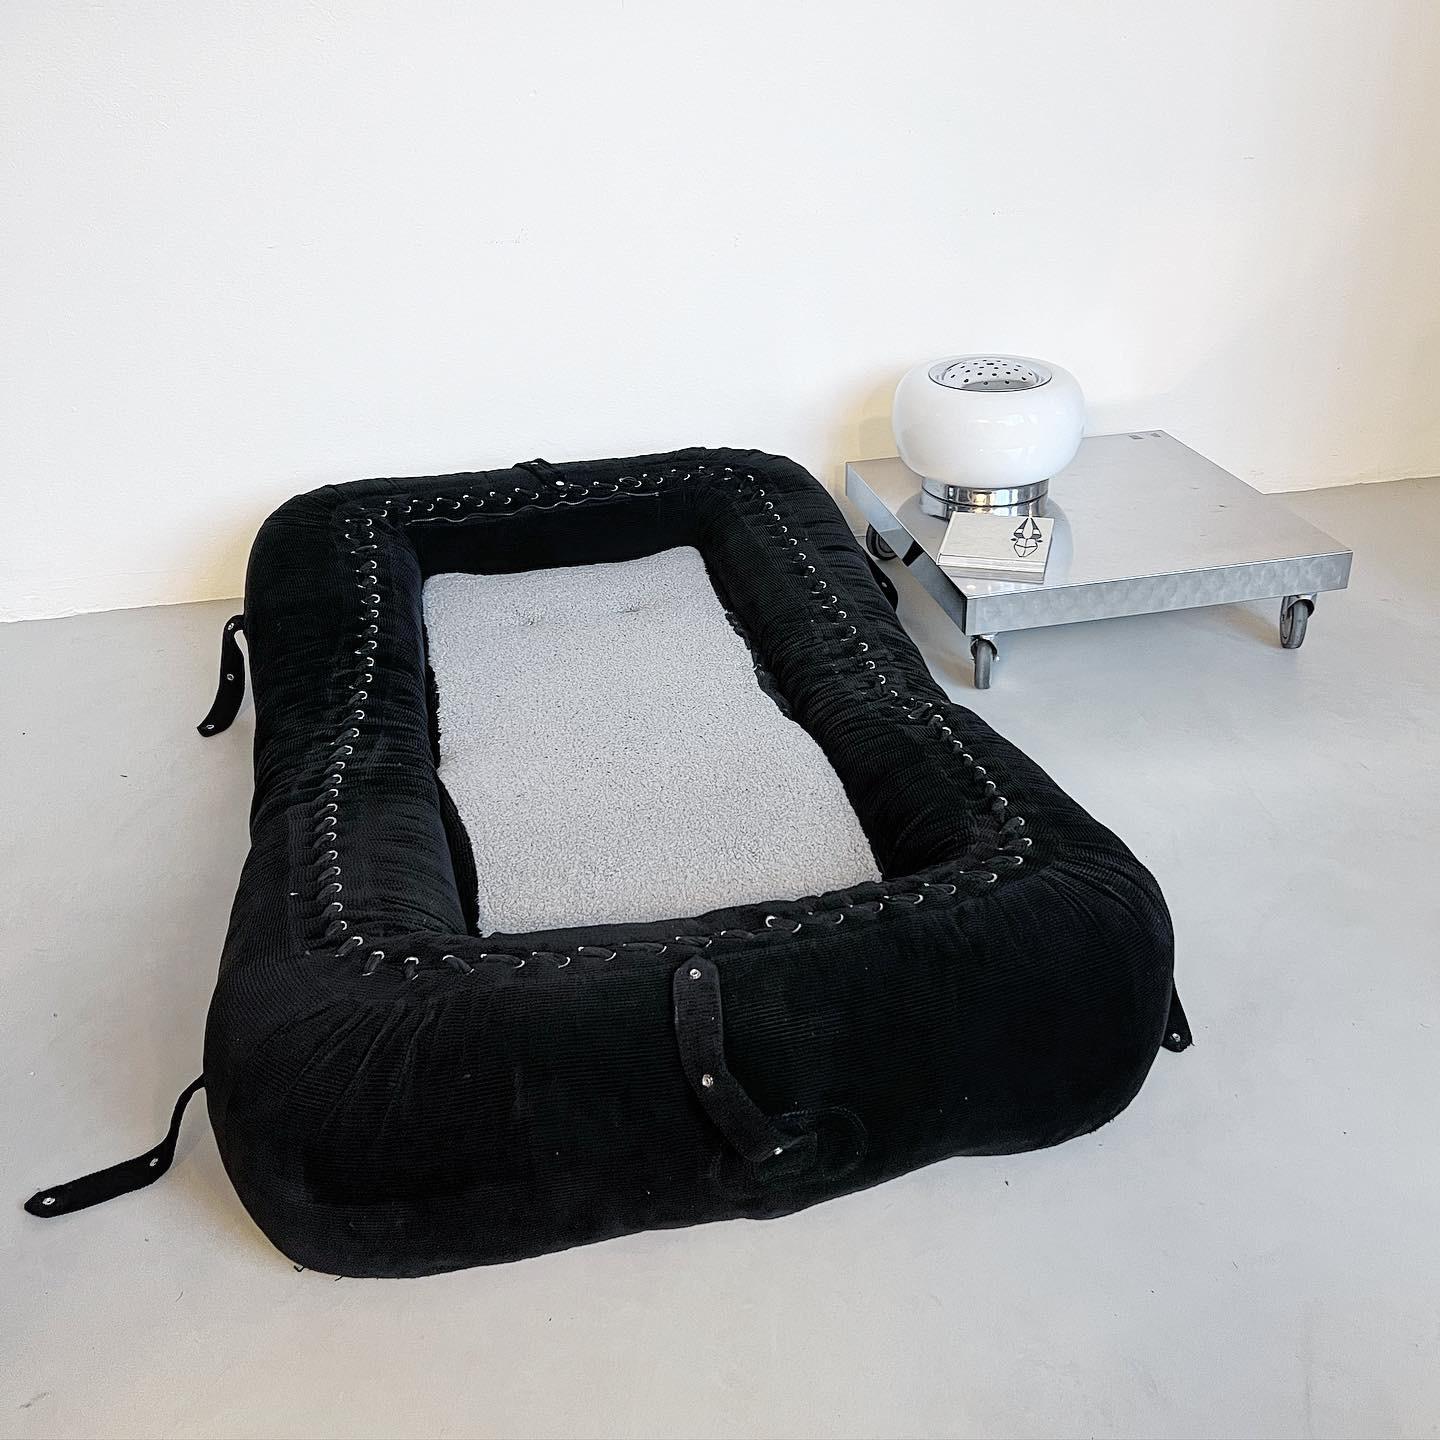 Fin du 20e siècle The Collective Anfibio Sofa Bed, black velvet lounge chair, Italian Space Age en vente